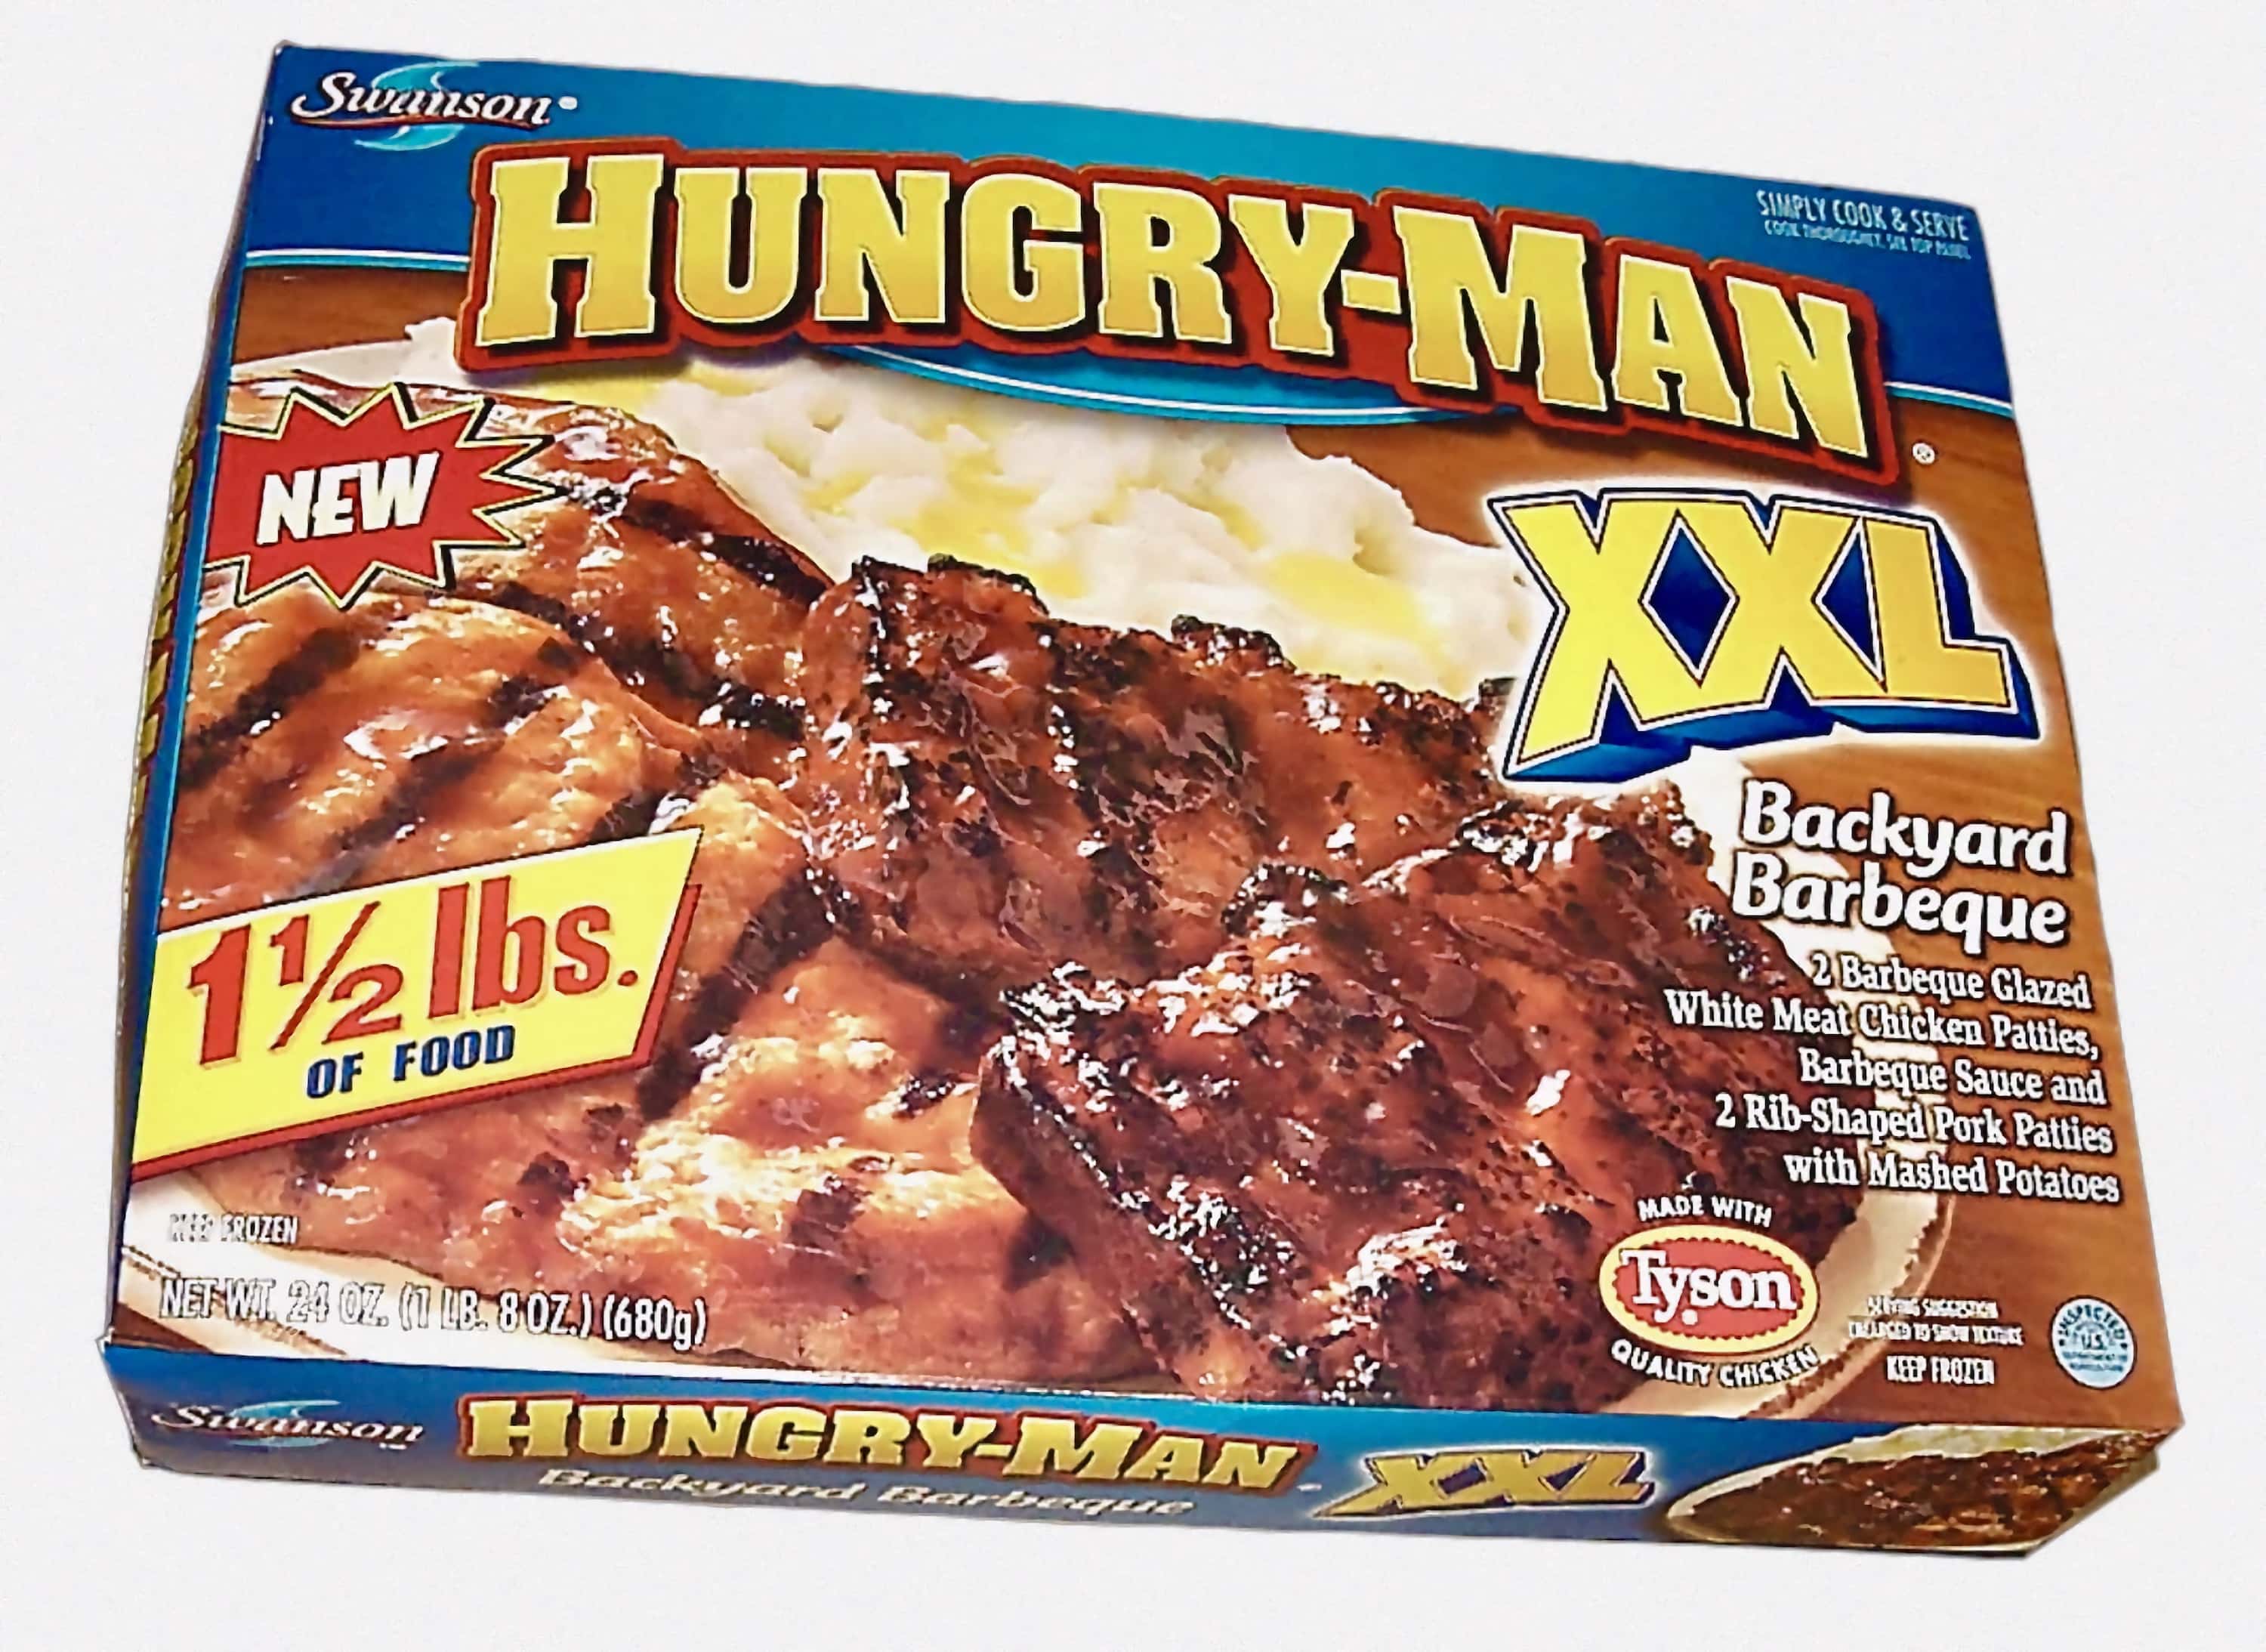 Hungry man xxl dinners